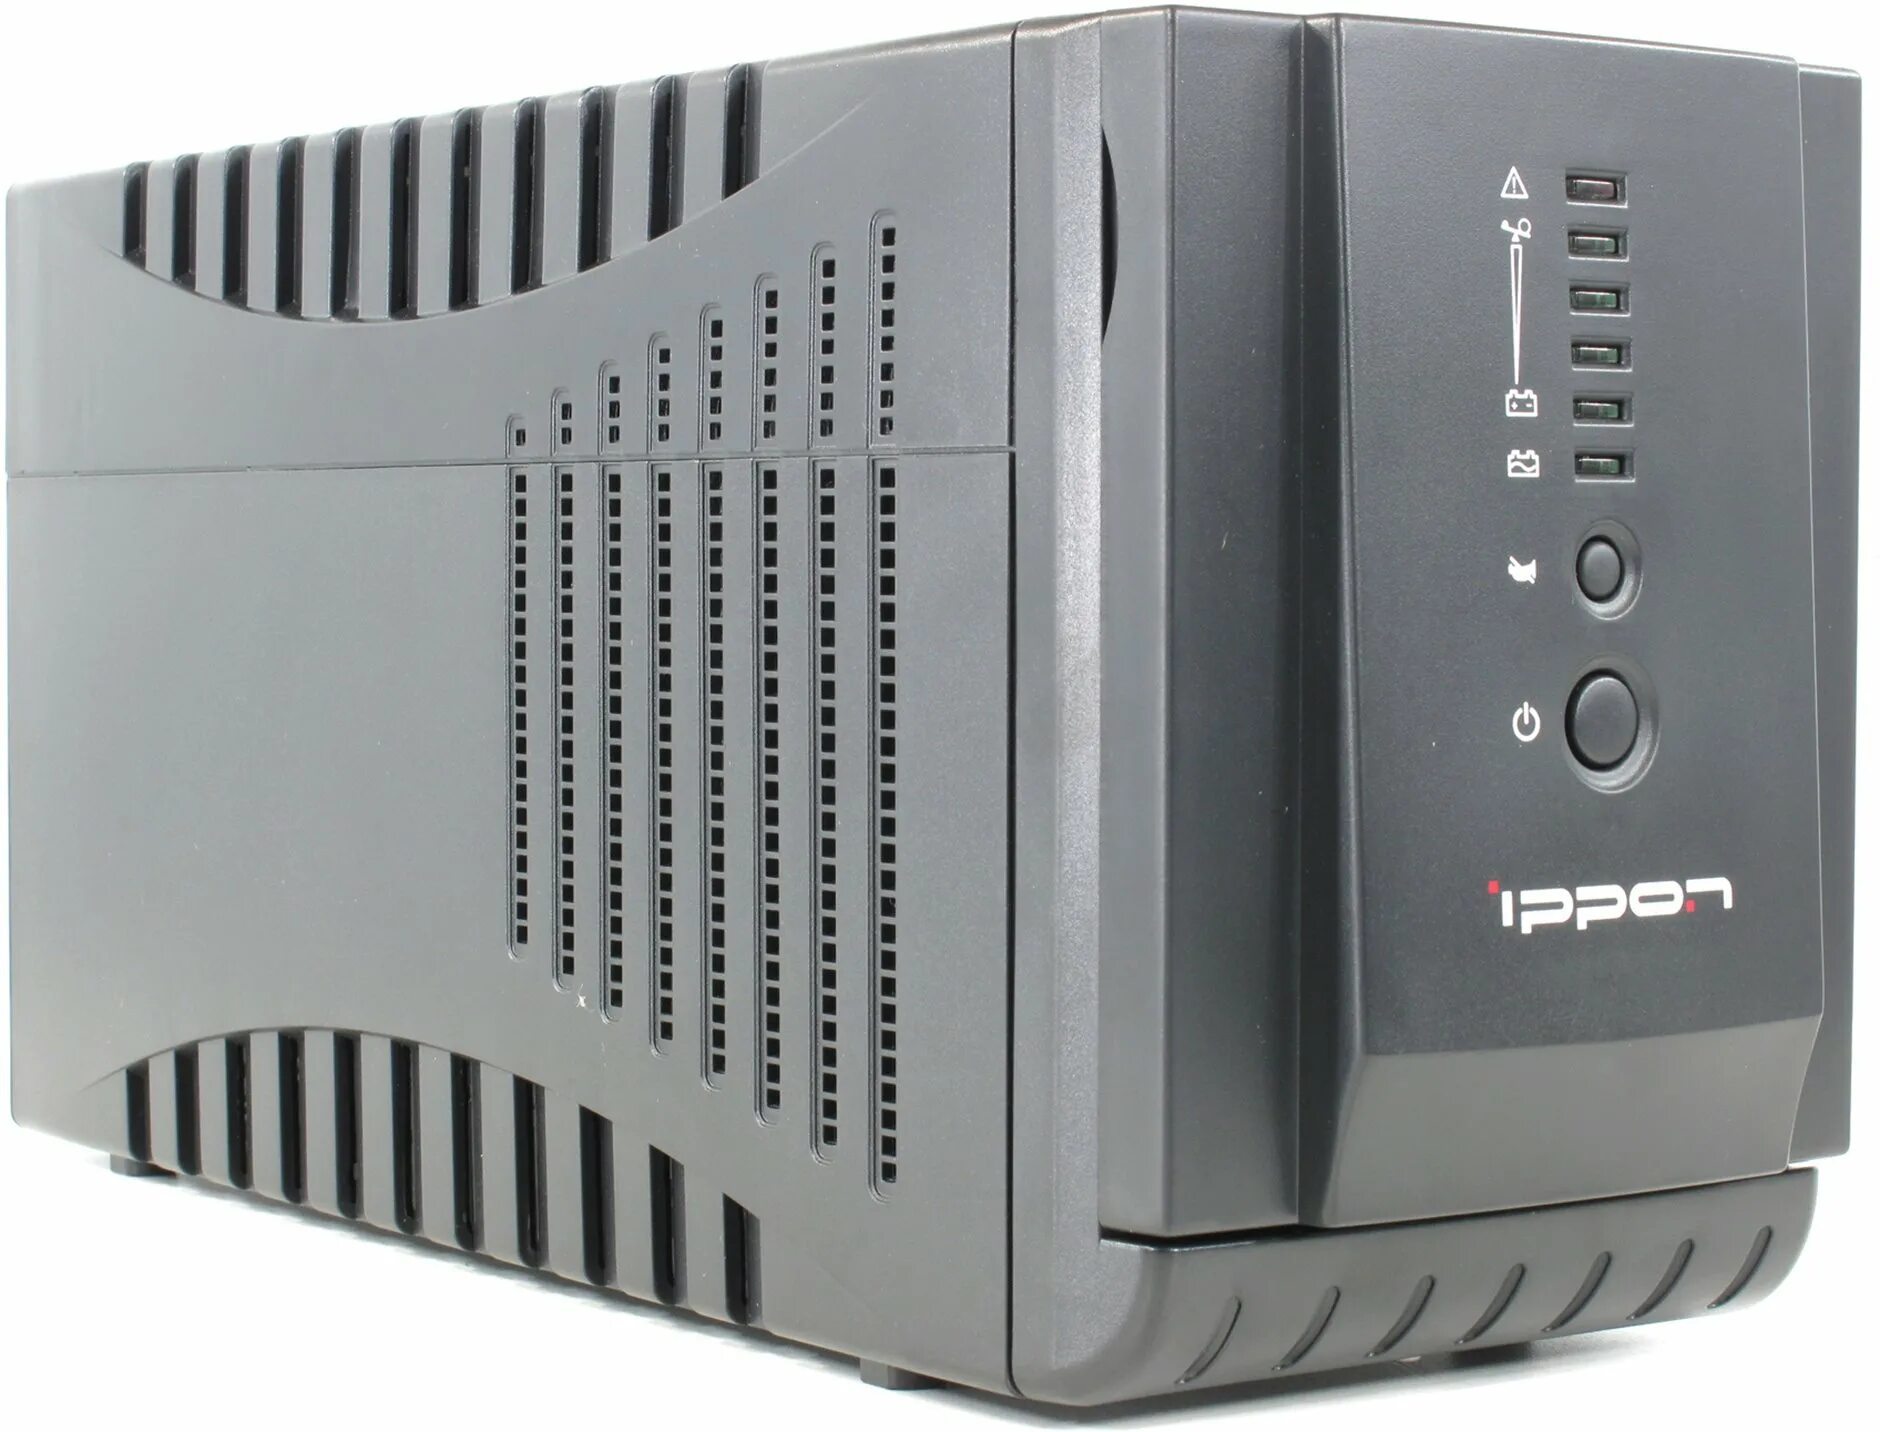 Ippon Smart Power Pro 2000. Ippon Smart Power Pro 1000. Ups Ippon Smart Power Pro 1000. ИБП Ippon Smart Power Pro 1000. Smart power pro 1000